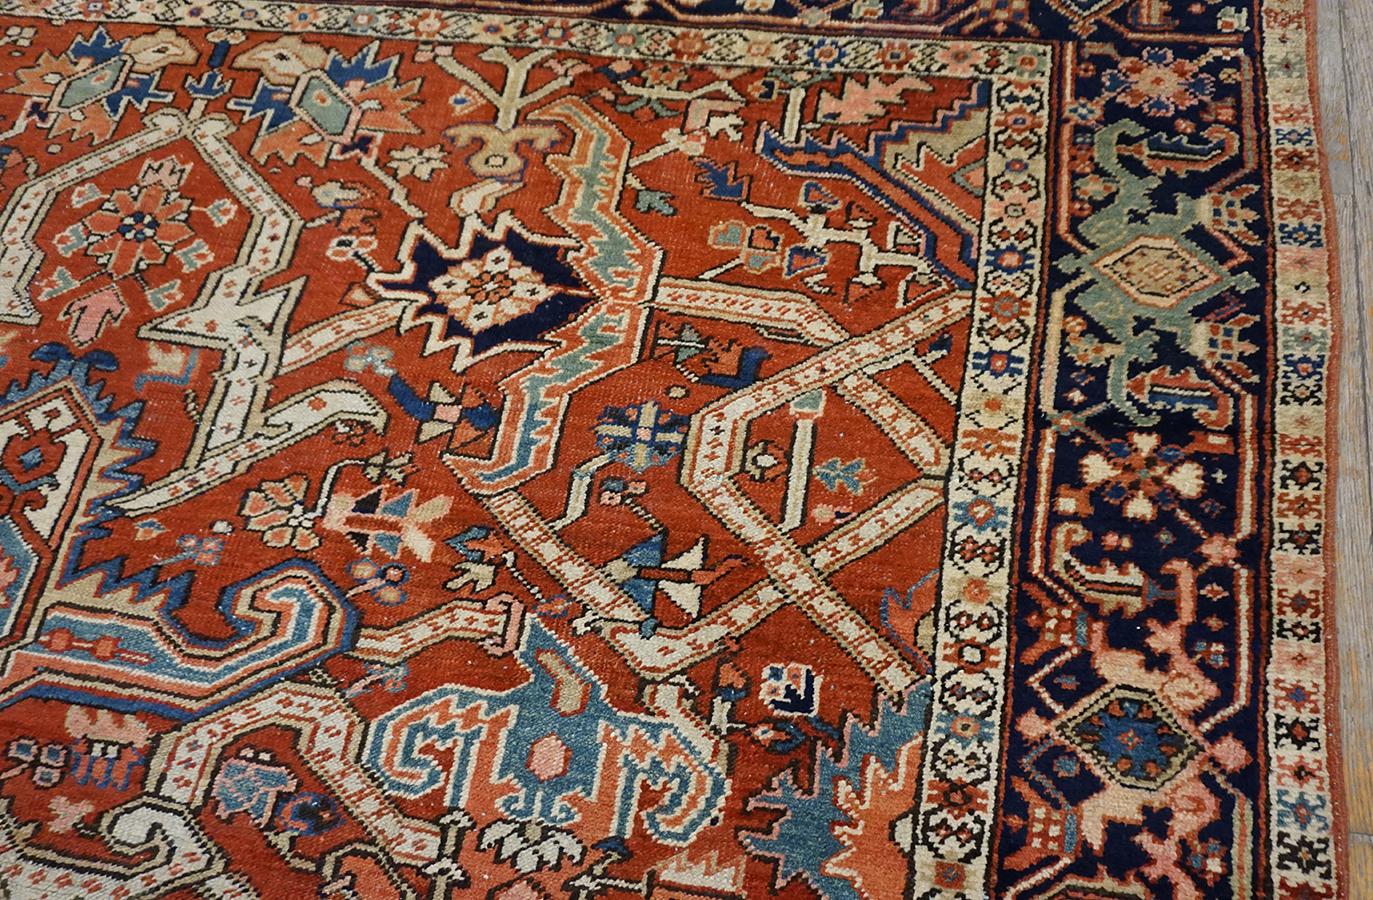 Late 19th Century N.W. Persian Heriz Carpet ( 8'3'' x 11'6'' - 250 x 350 cm ) For Sale 5